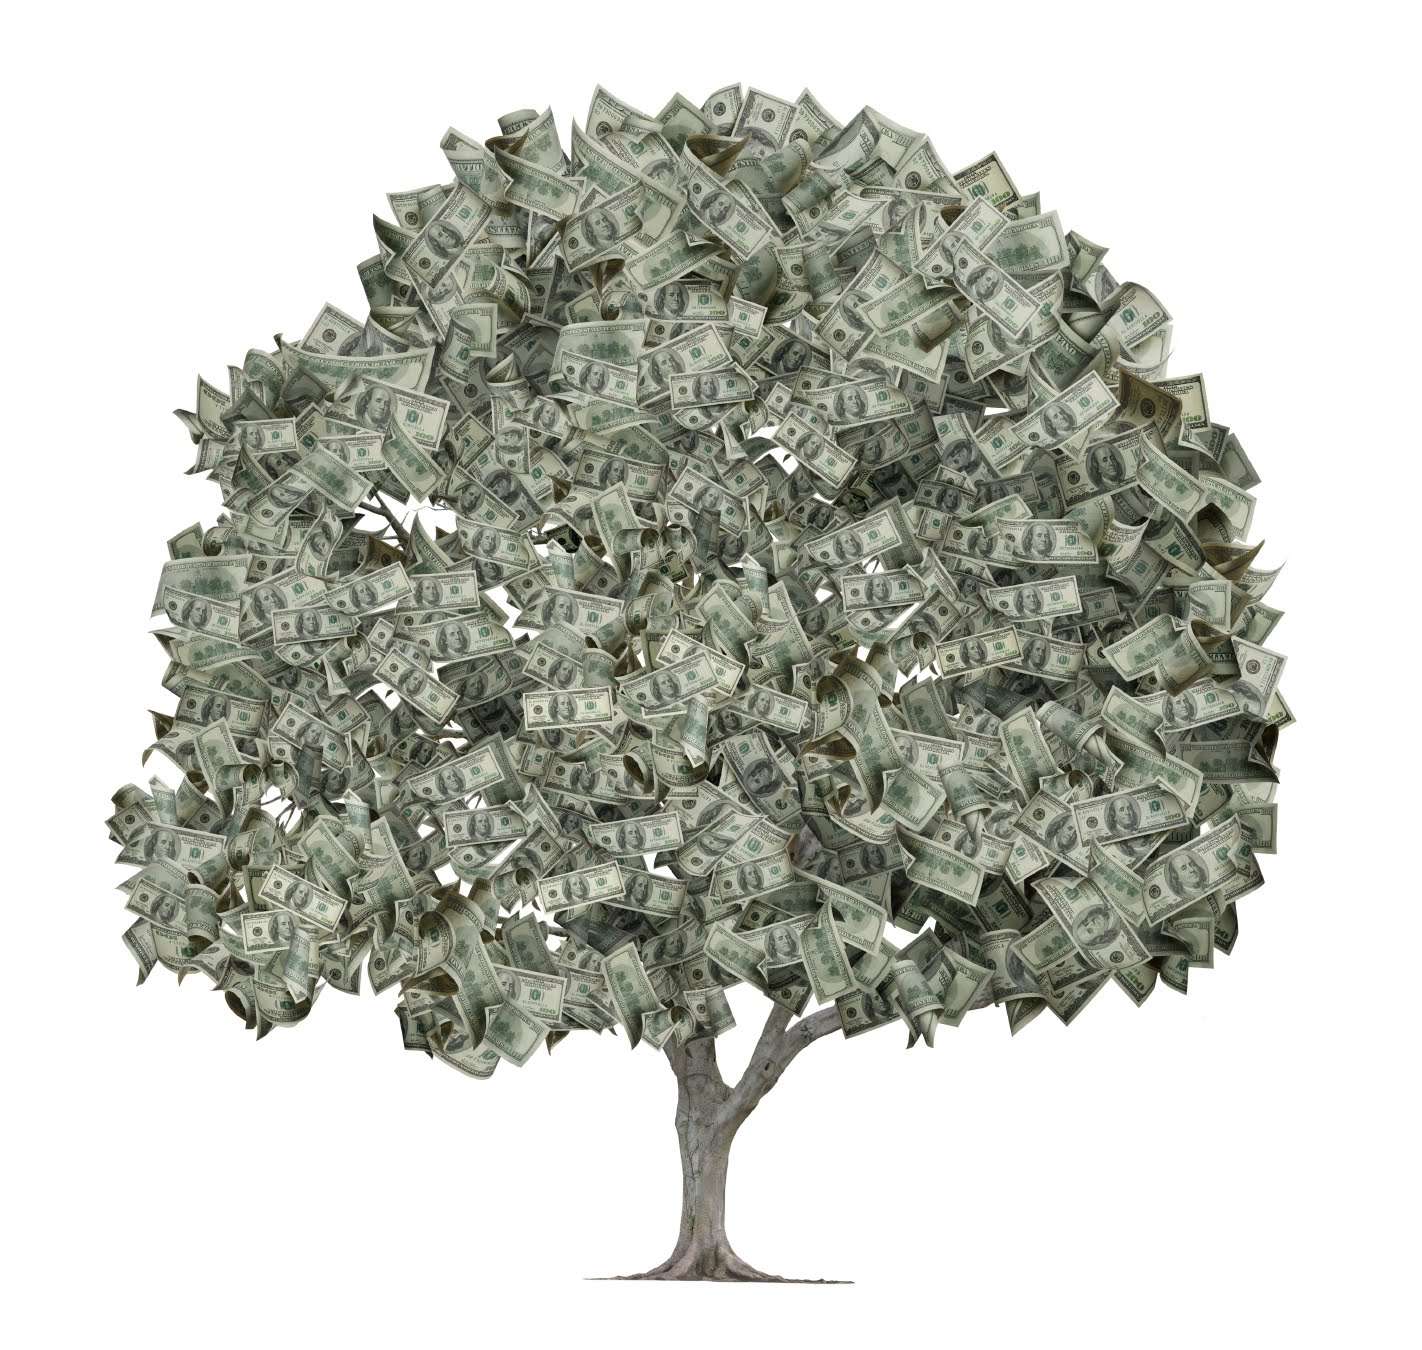 http://4.bp.blogspot.com/-VrKGuN_pMOY/TjPql78UI9I/AAAAAAAAATg/rcI3edZvYr8/s1600/iStock_money+tree.jpg